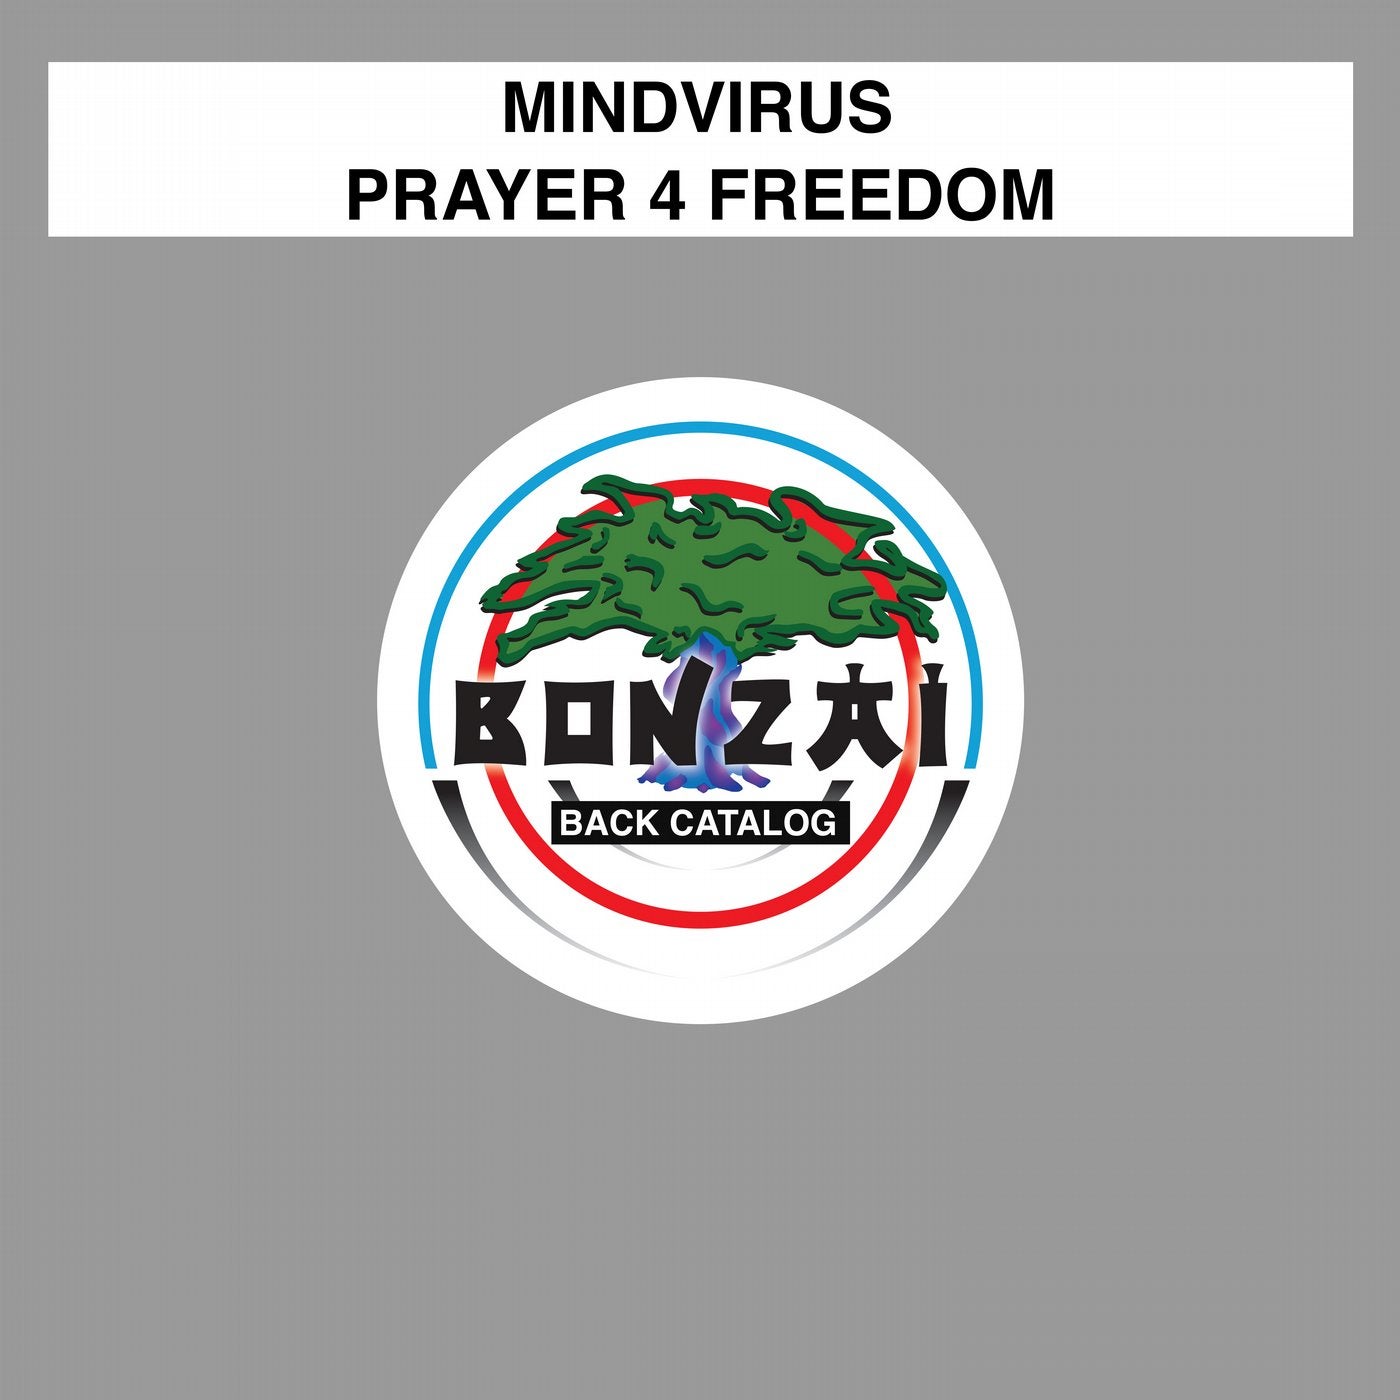 Prayer 4 Freedom